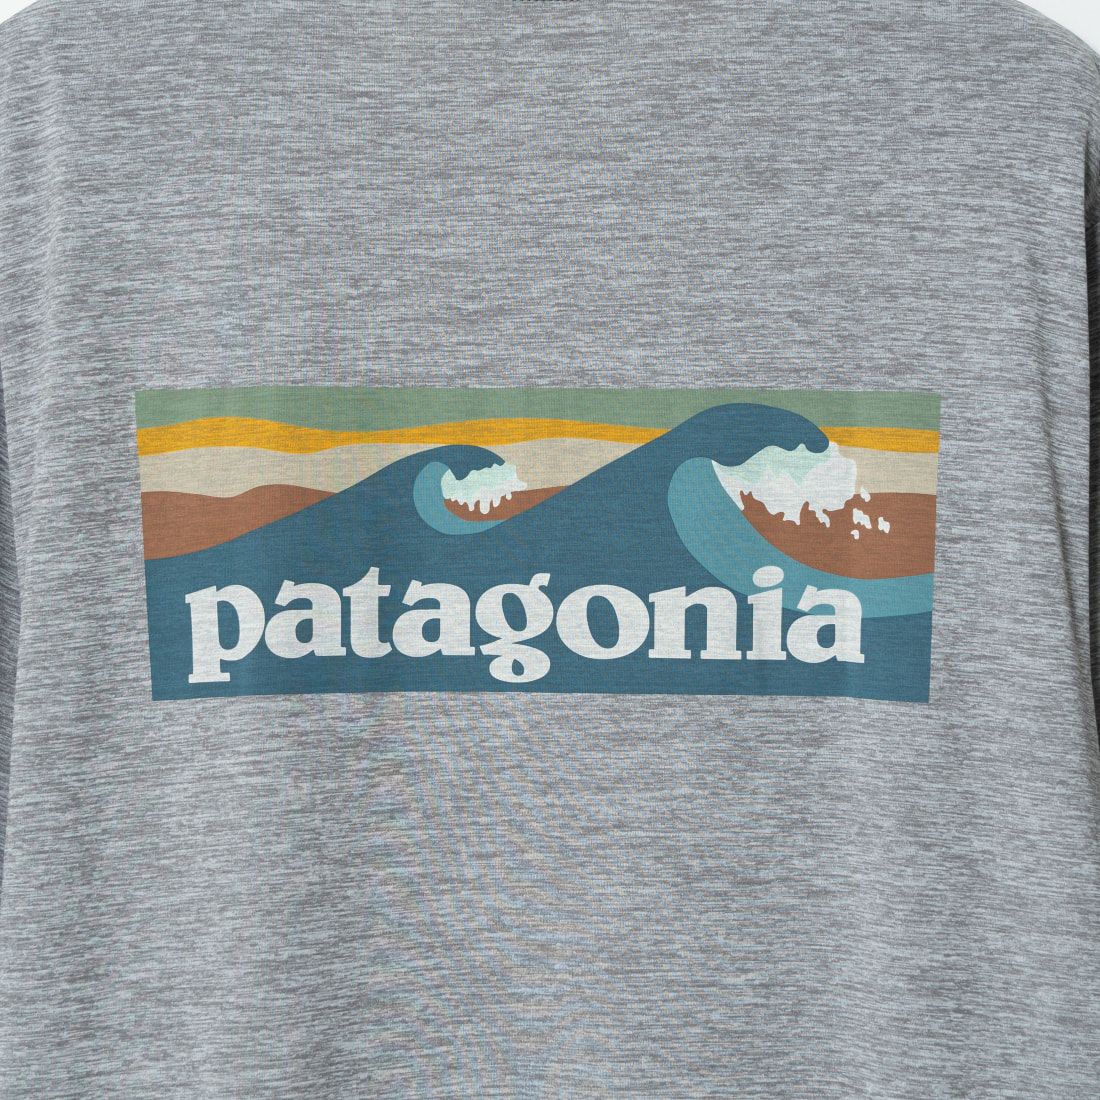 patagonia [パタゴニア] メンズ キャプリーン クールデイリー グラフィックTシャツ [45355] BLAF